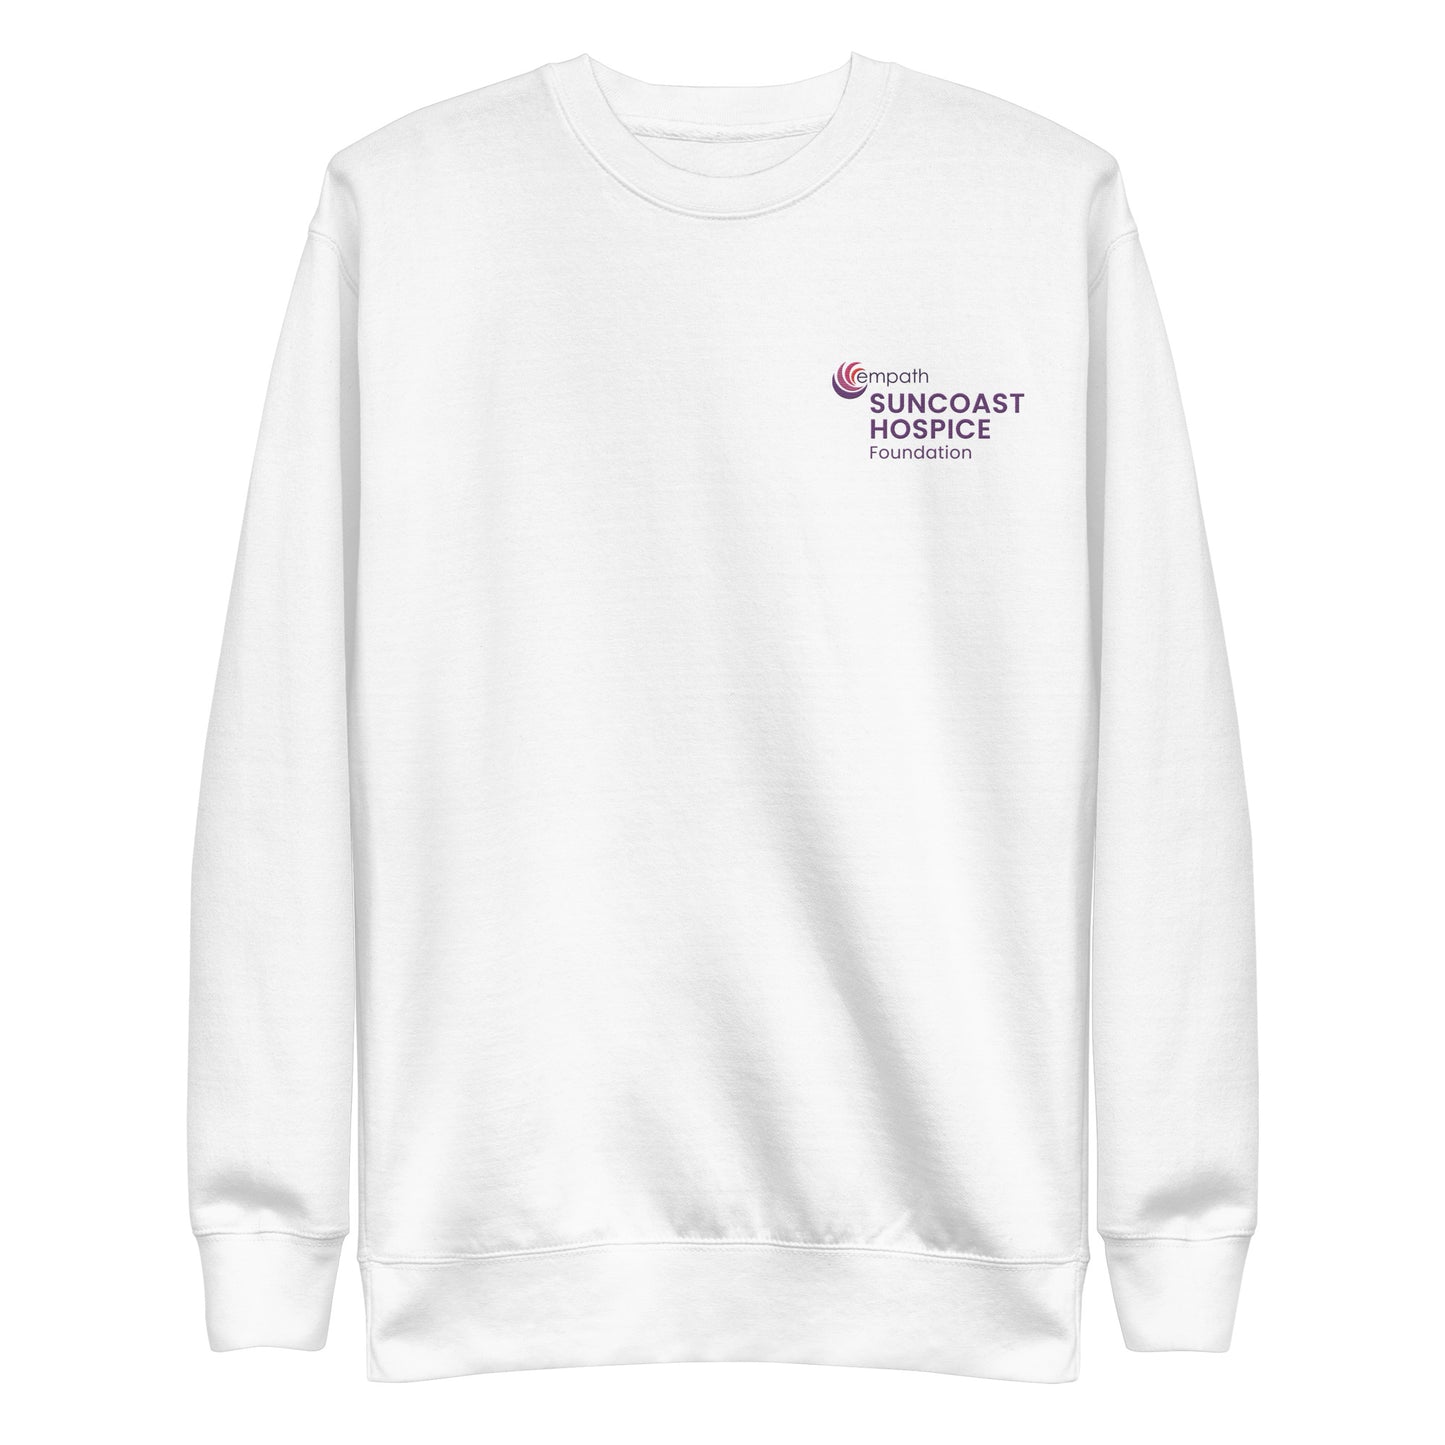 Unisex Premium Sweatshirt (fitted cut) - Suncoast Hospice Foundation